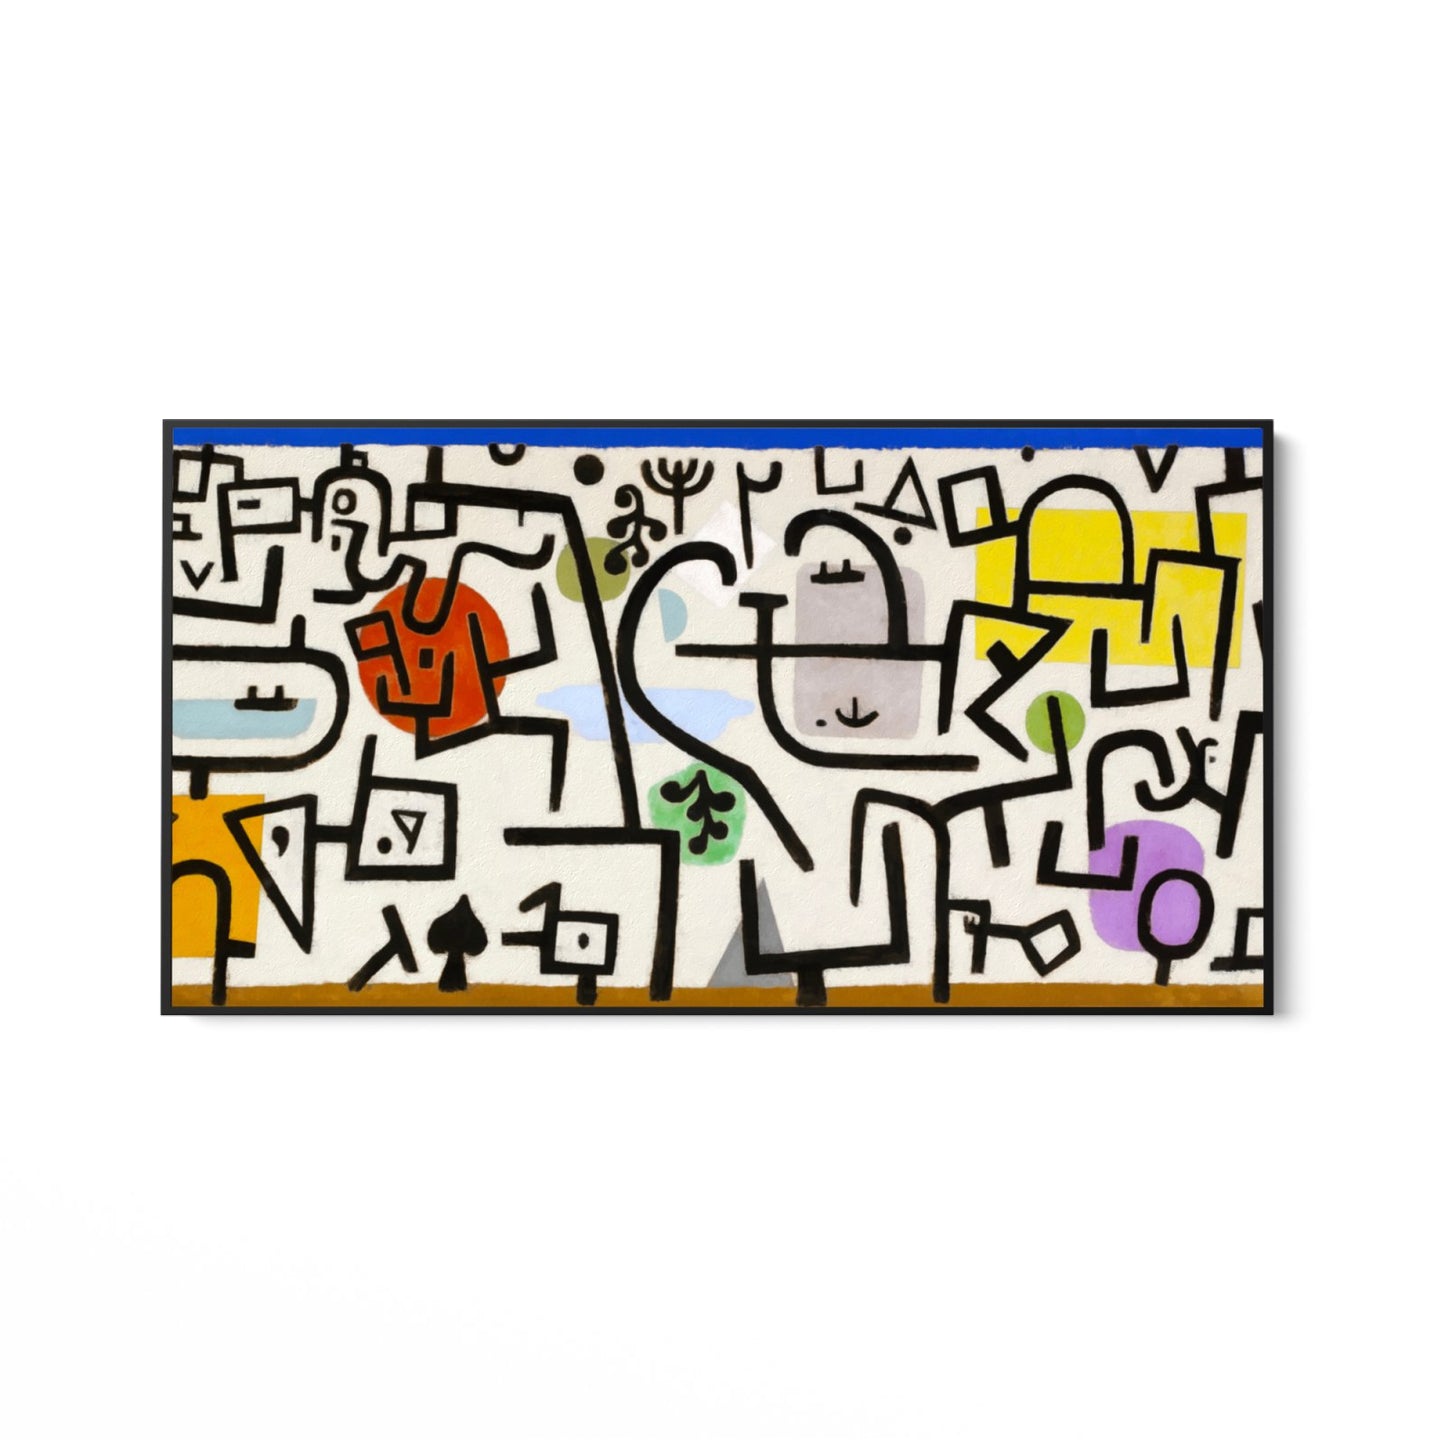 Paul Klee, Rijke Port